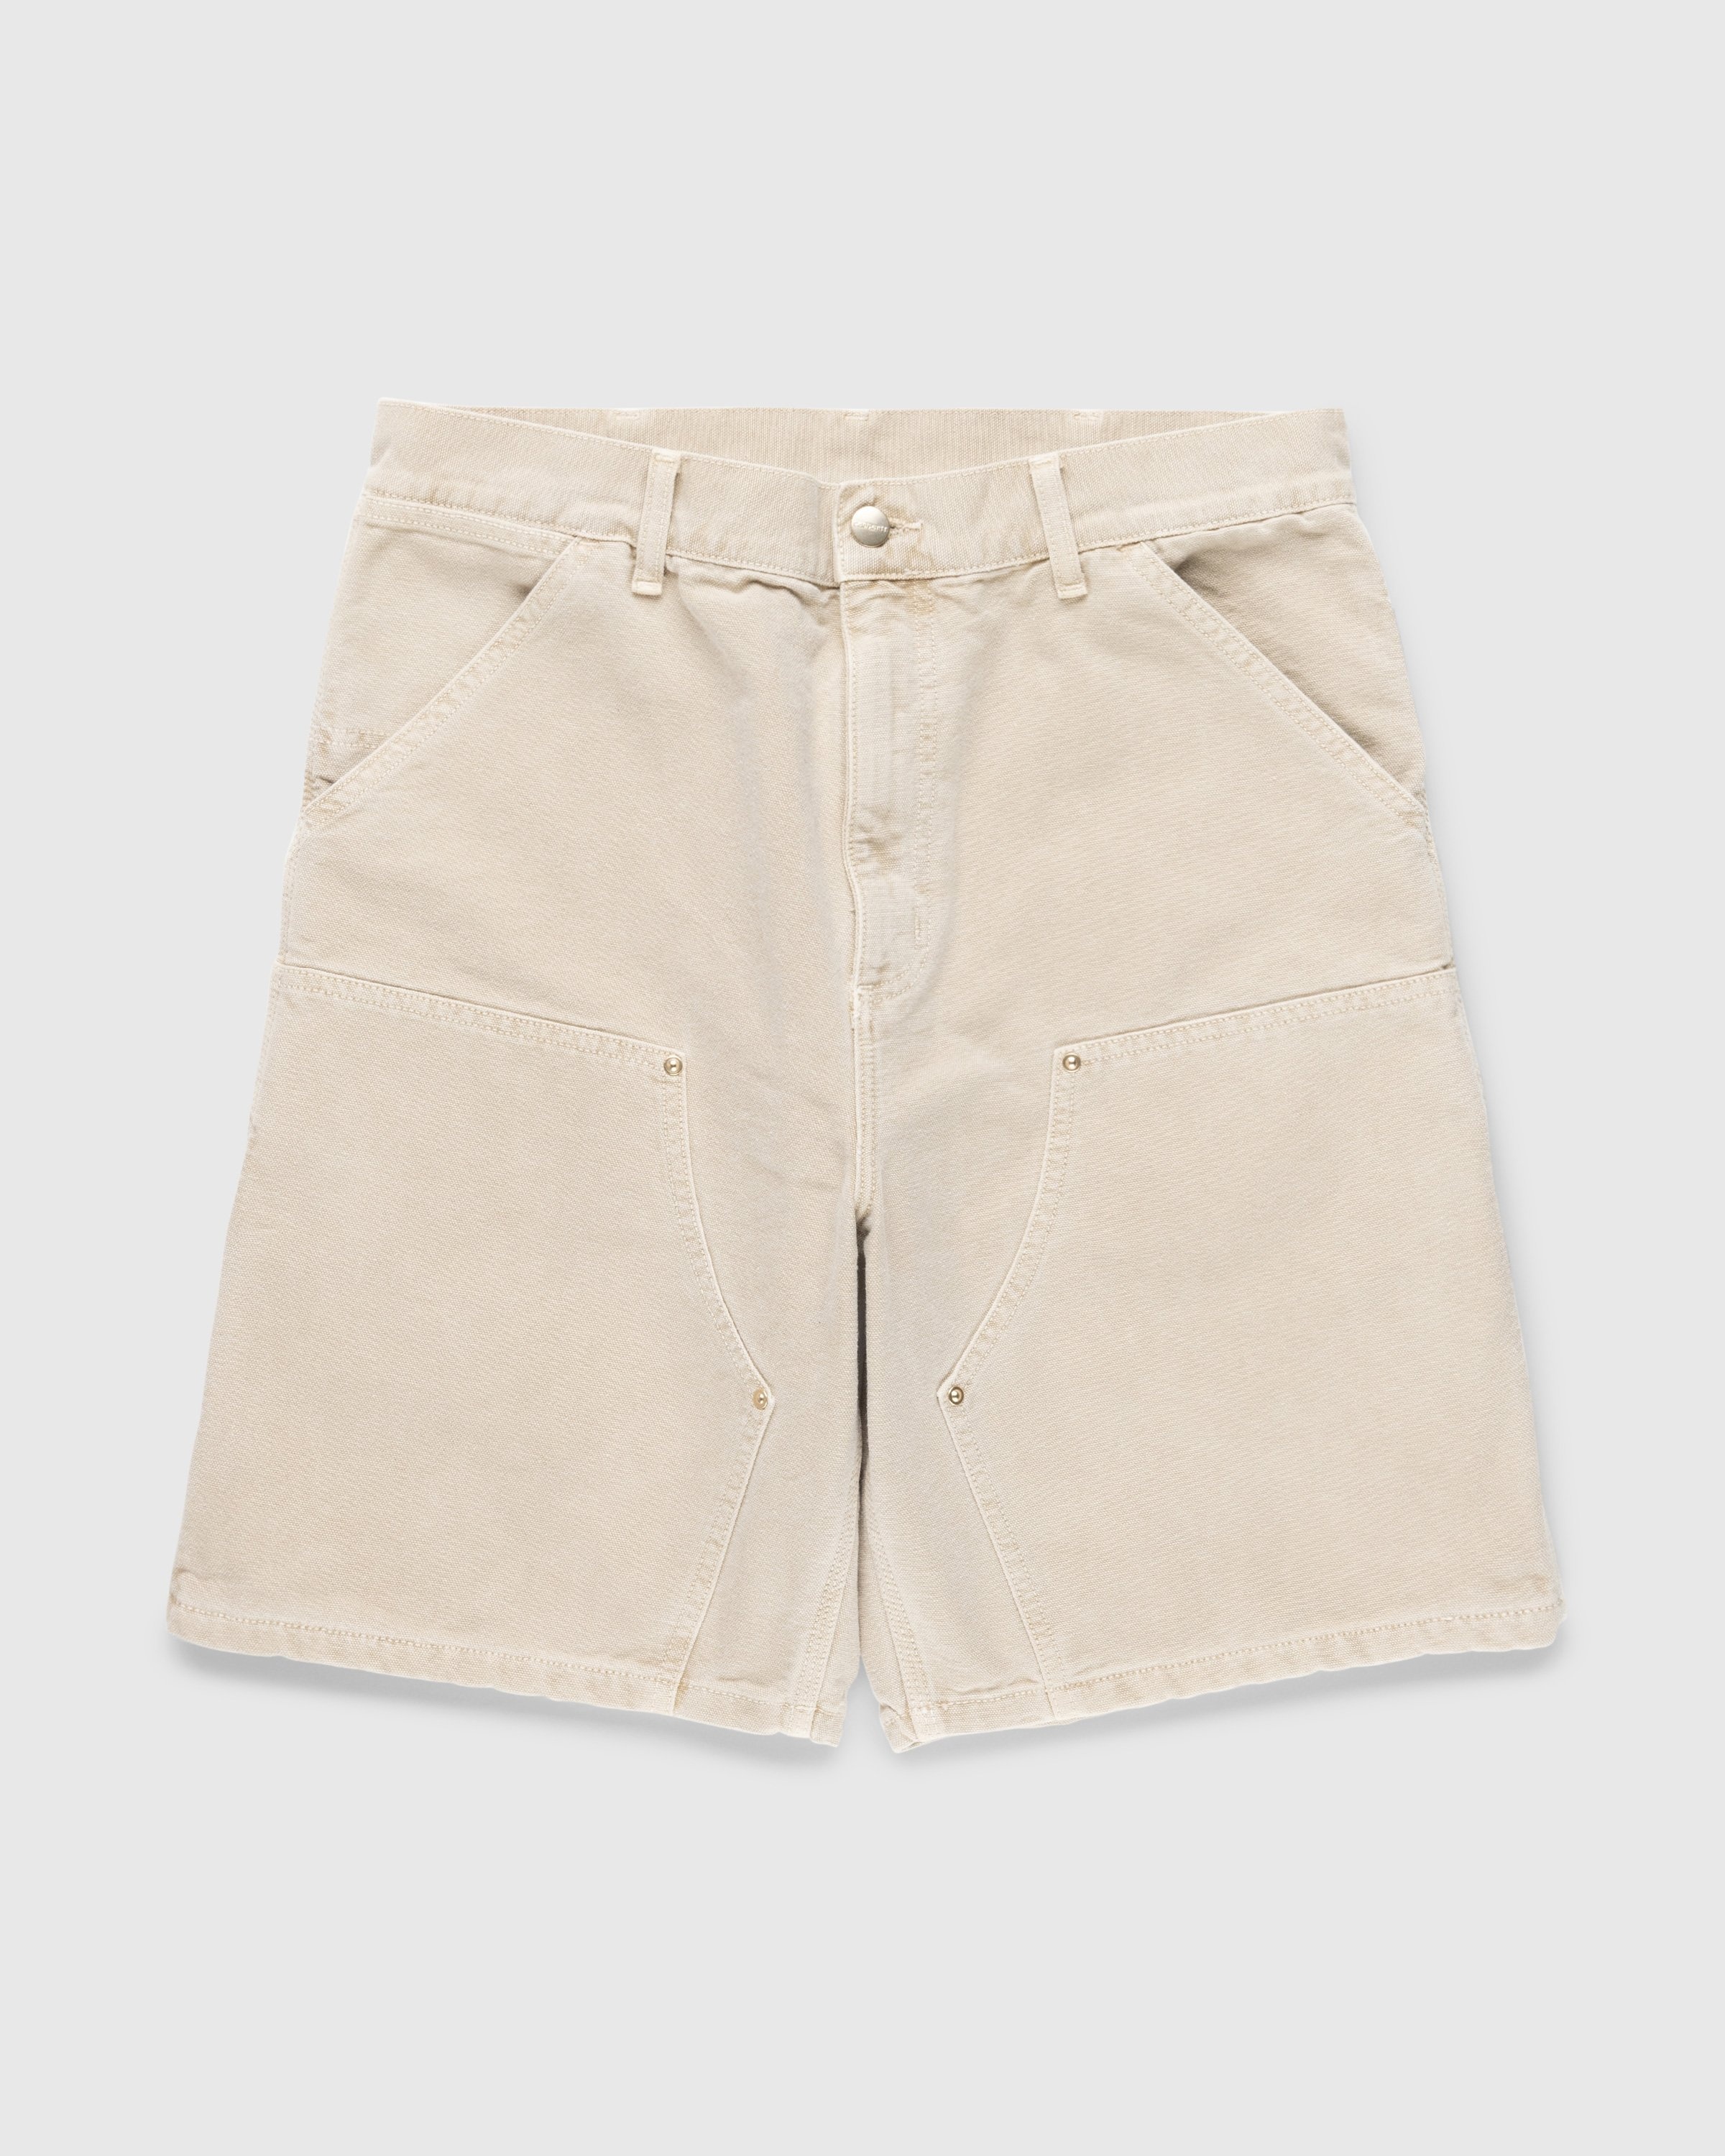 Carhartt WIP – Double Knee Short Brown - Shorts - Brown - Image 1